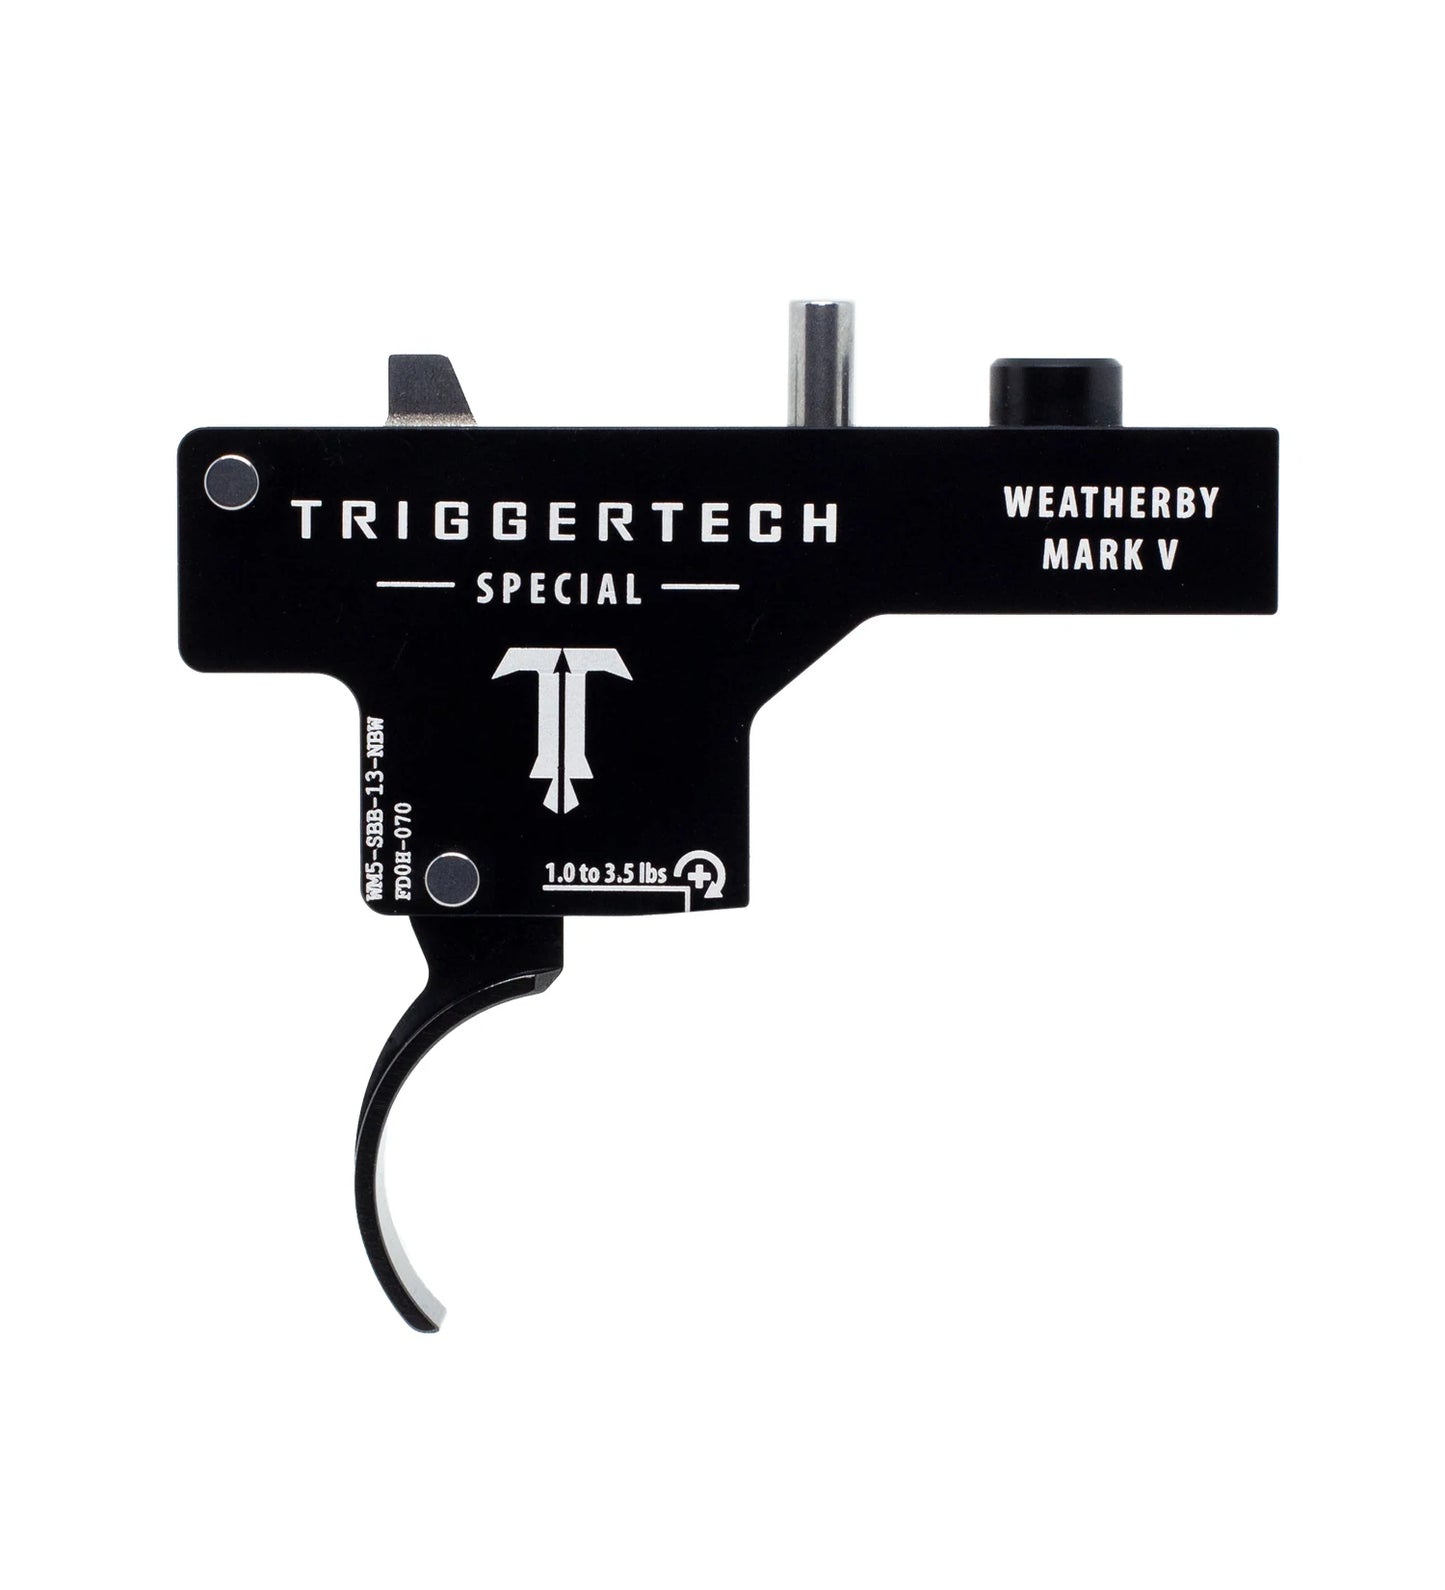 Weatherby Mark V - TriggerTech